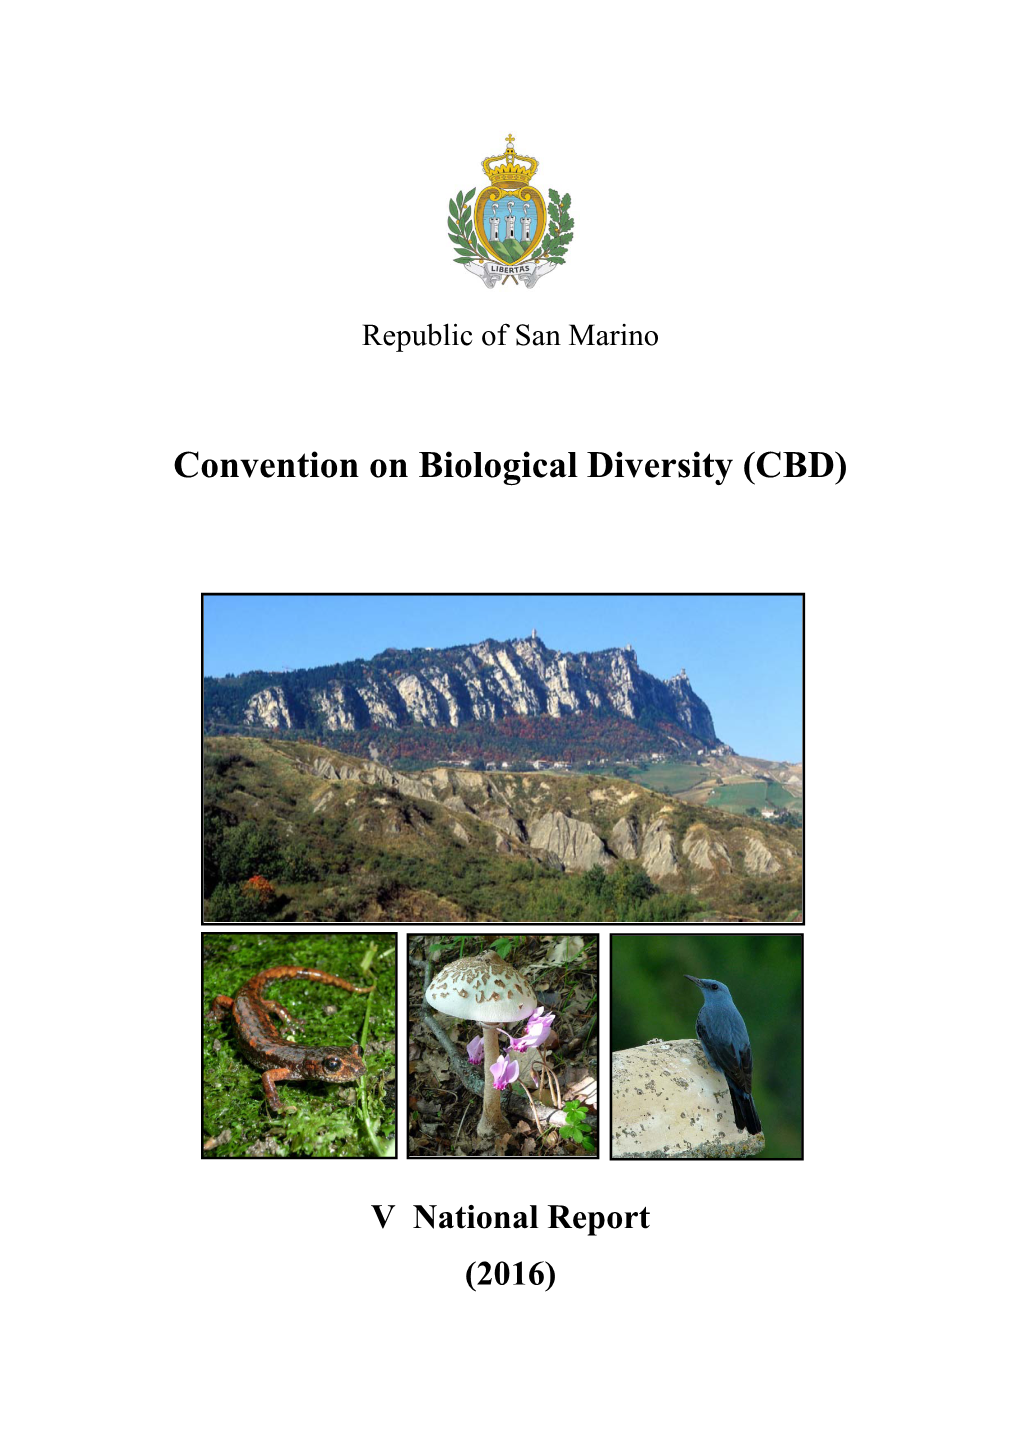 Convention on Biological Diversity – Republic of San Marino